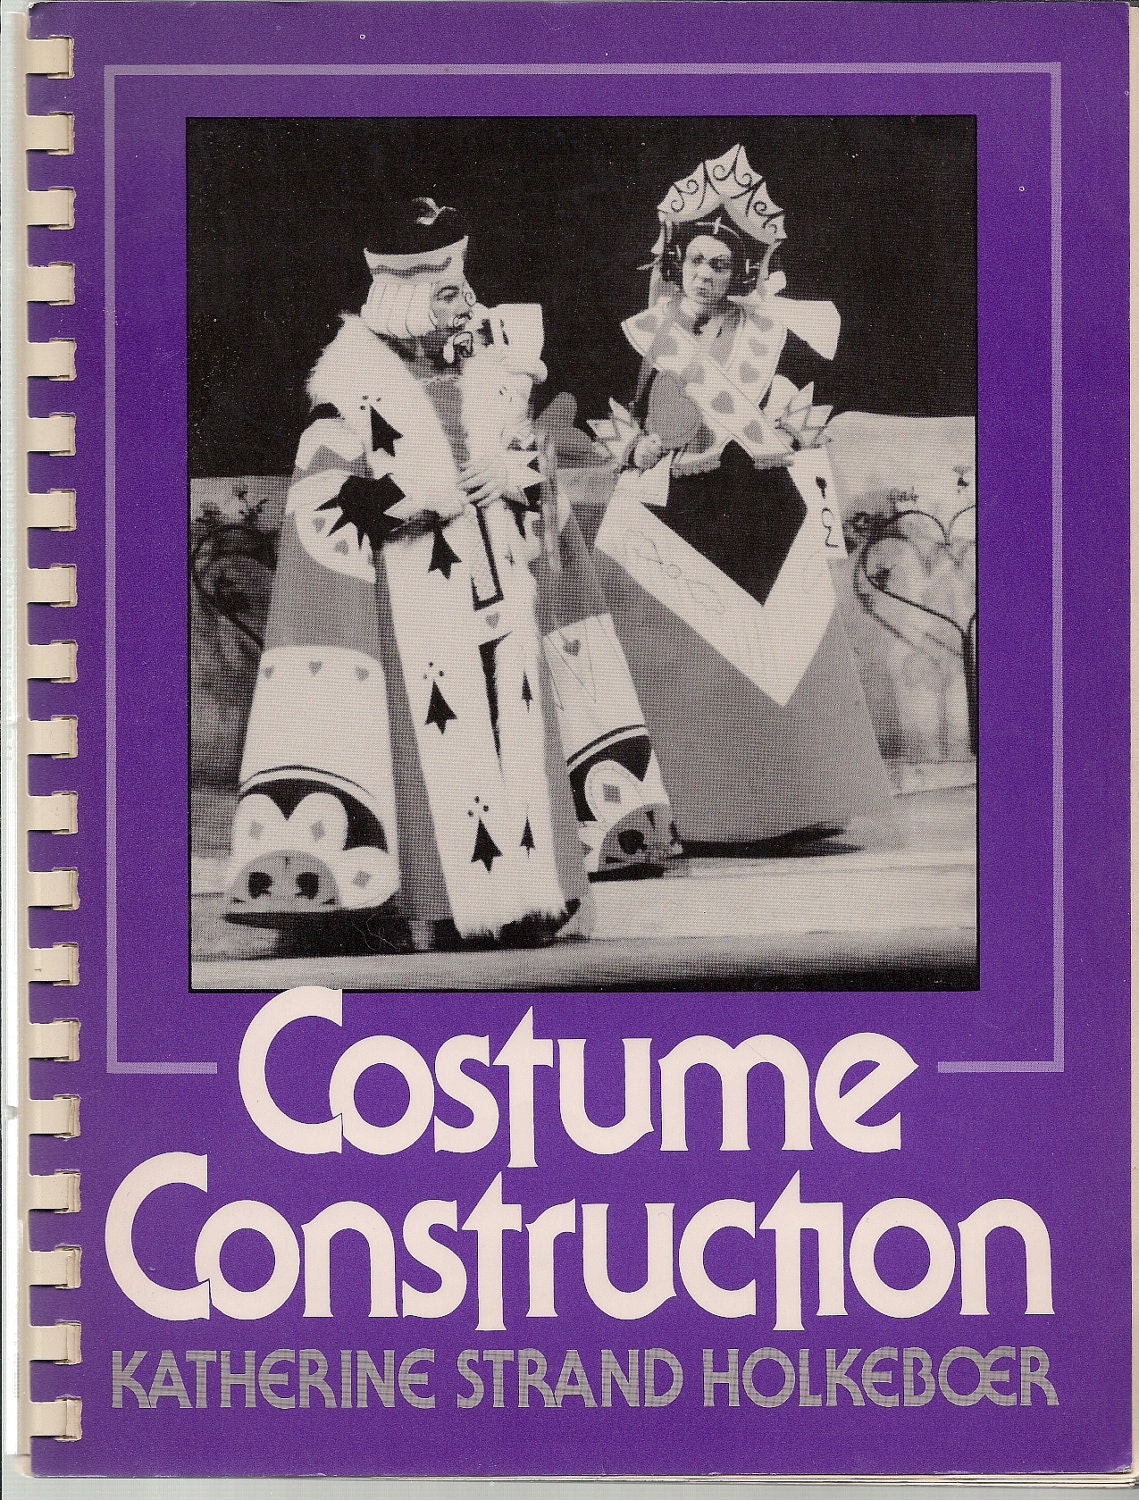 Costume Construction Katherine Strand Holkeboer